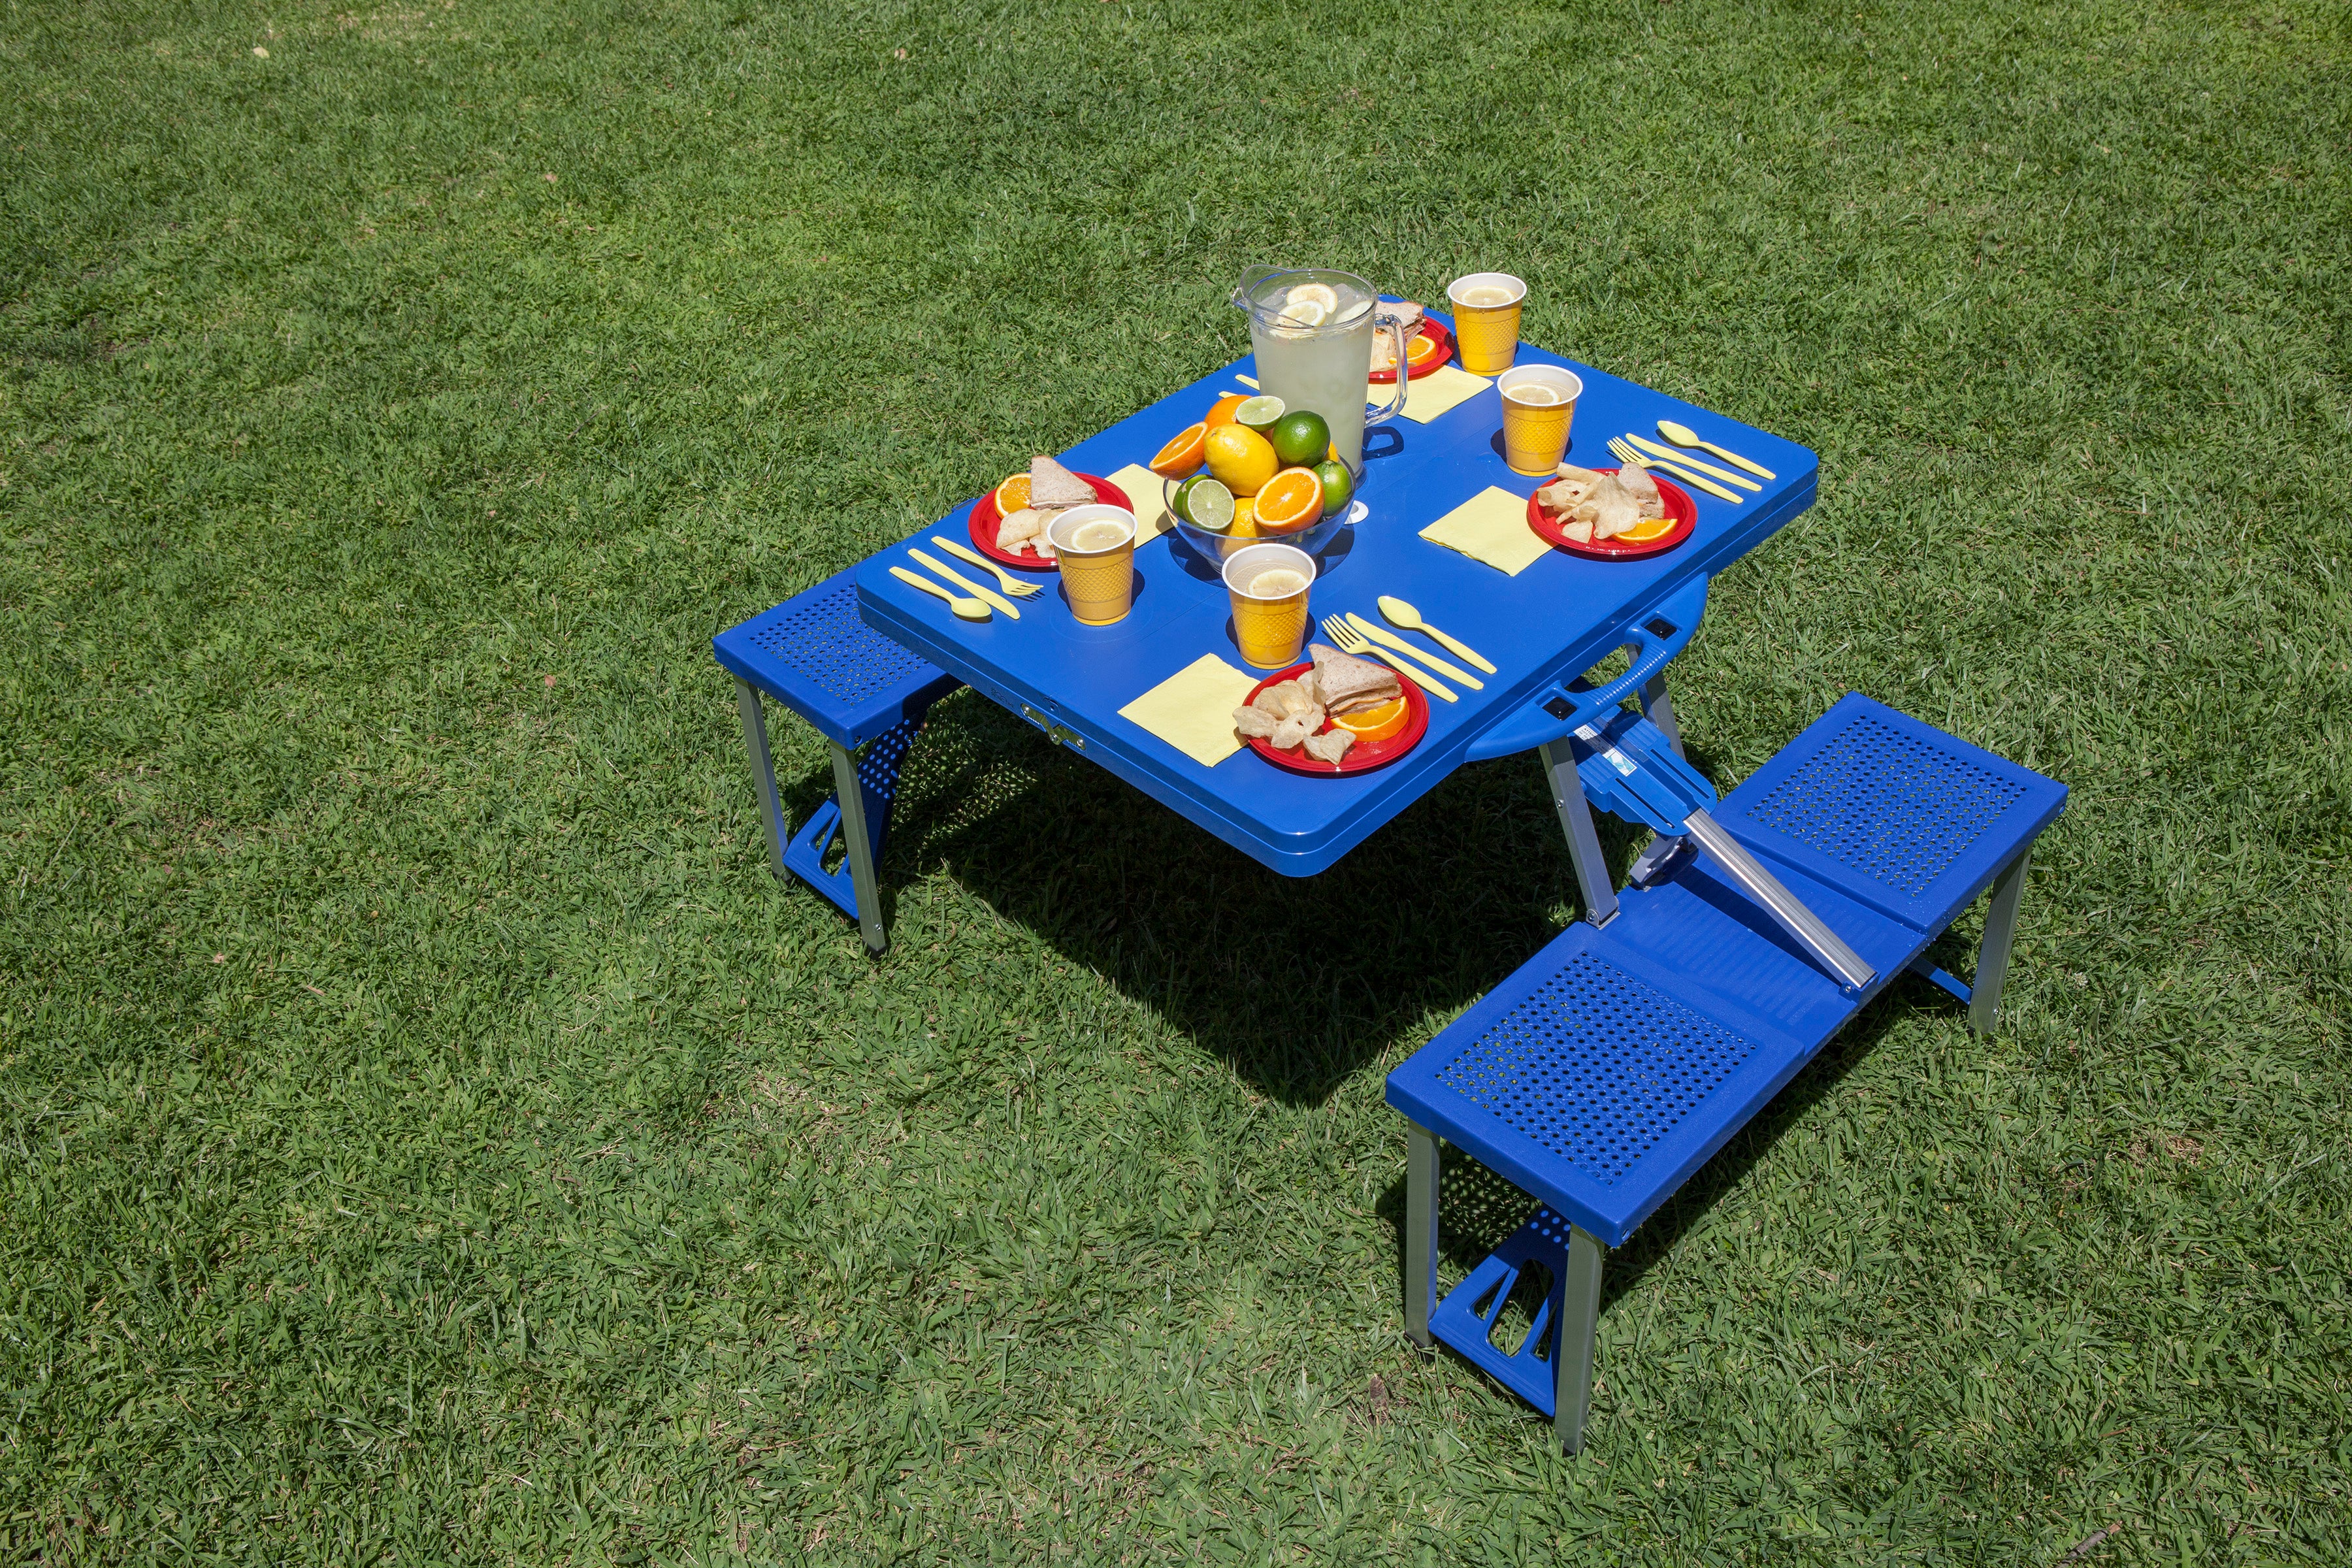 Football Field - Illinois Fighting Illini - Picnic Table Portable Folding Table with Seats